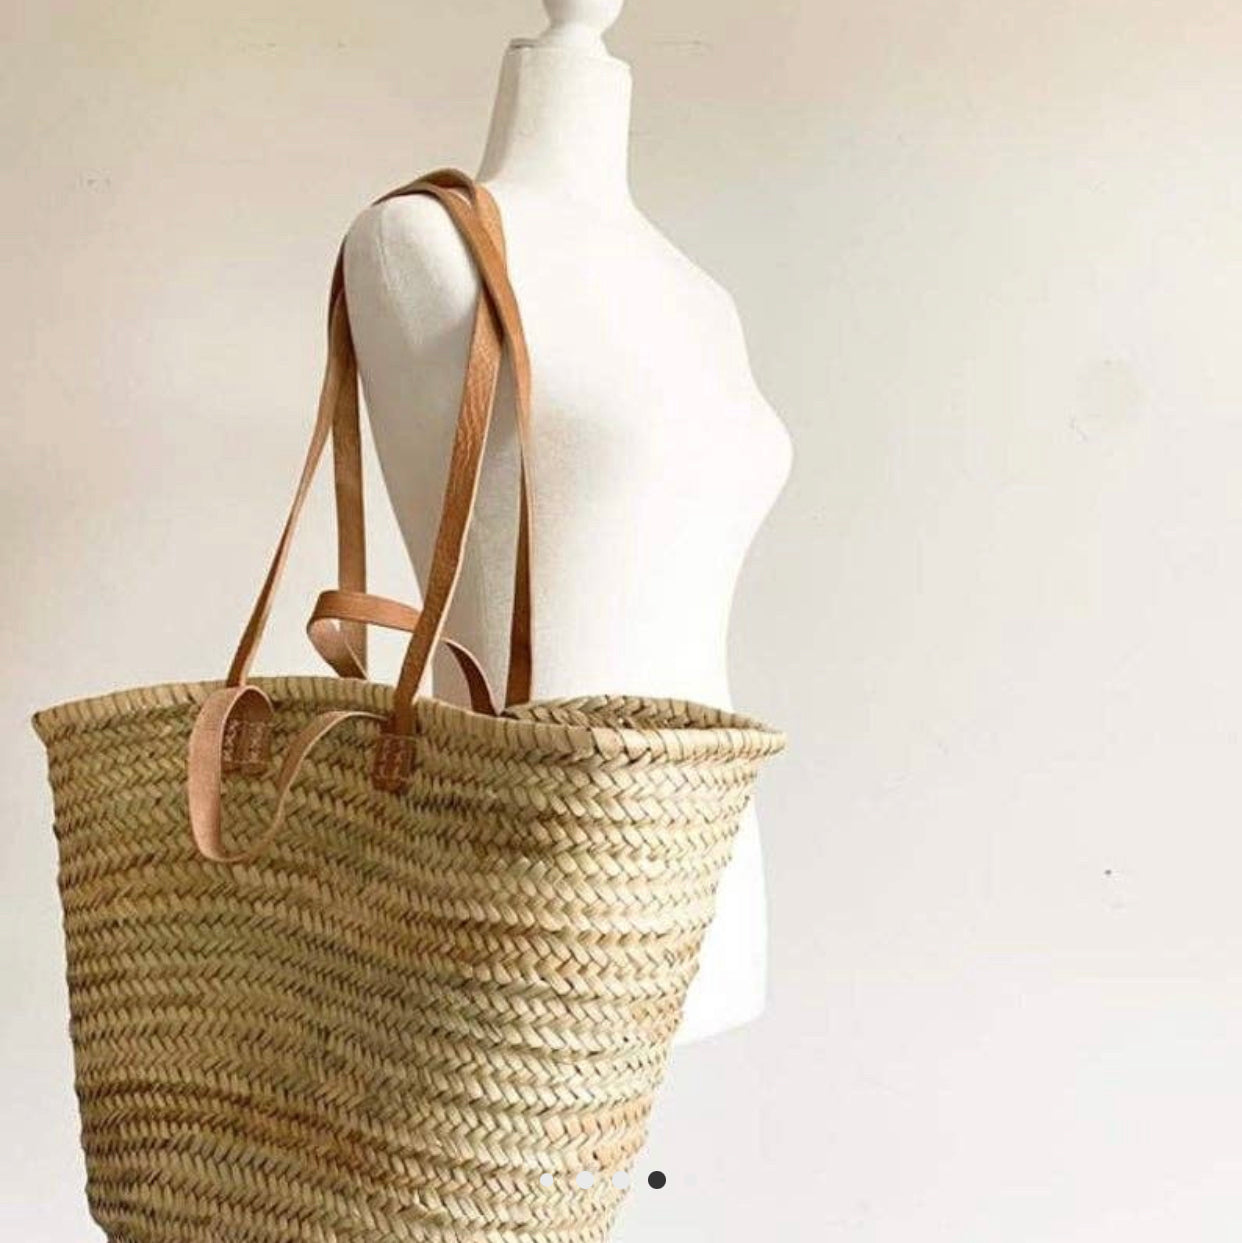 Handmade French Market Basket - Leather Handles